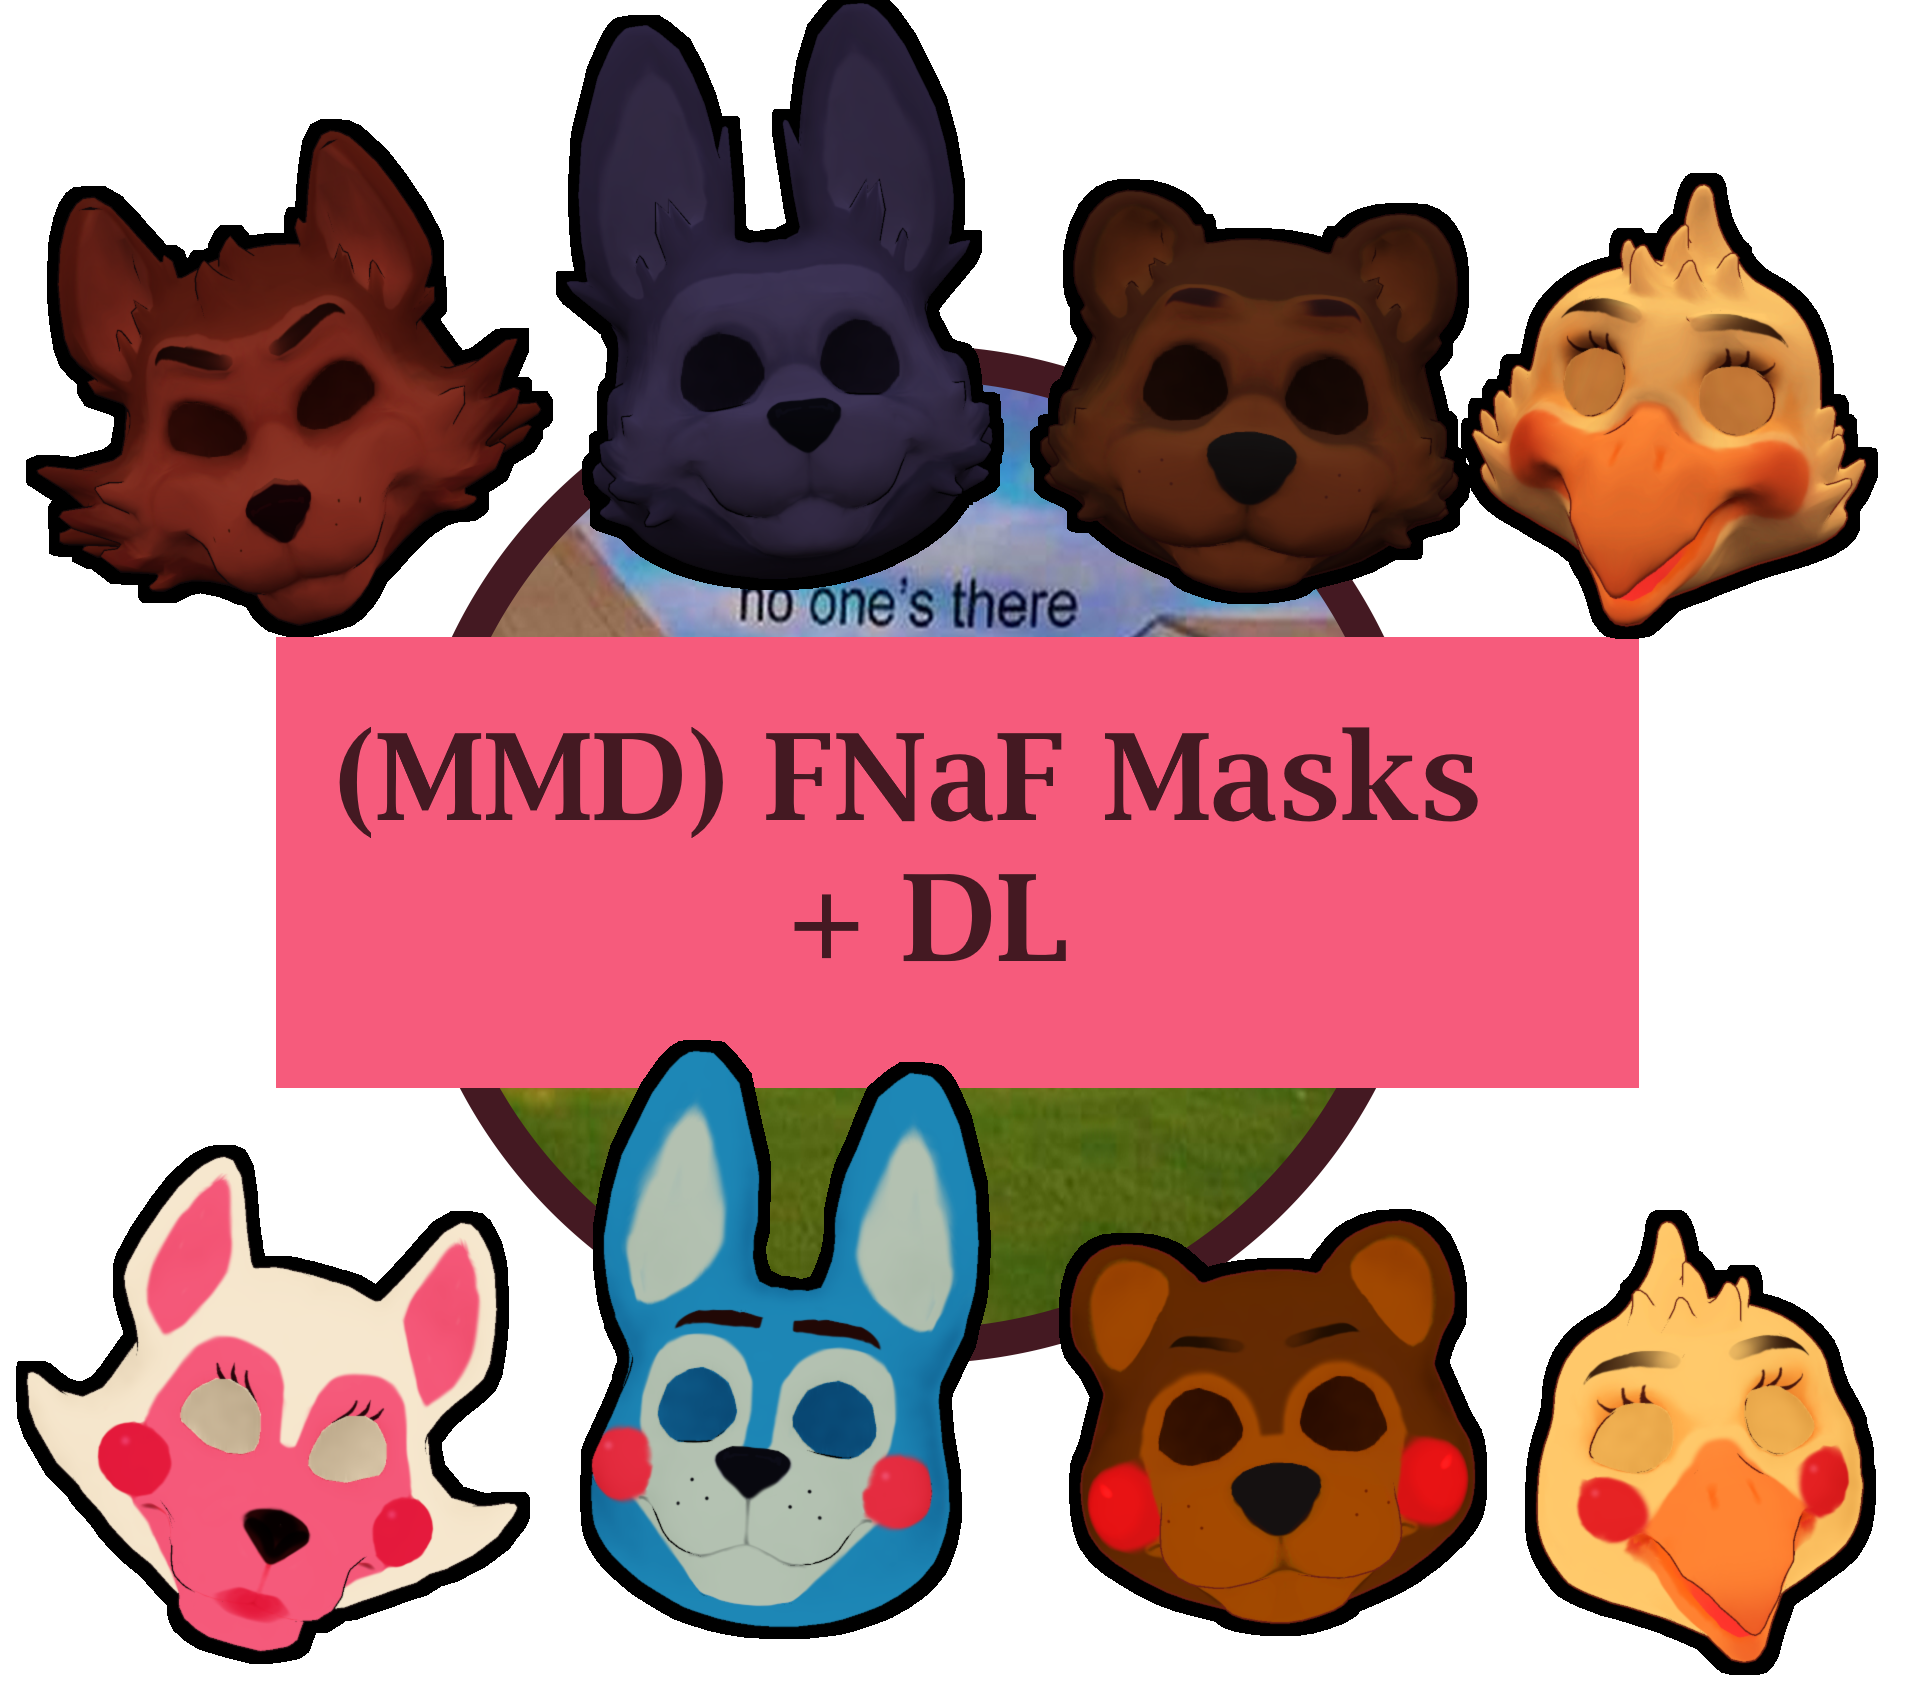 20 Five Nights At Freddy's FNAF Masks ideas